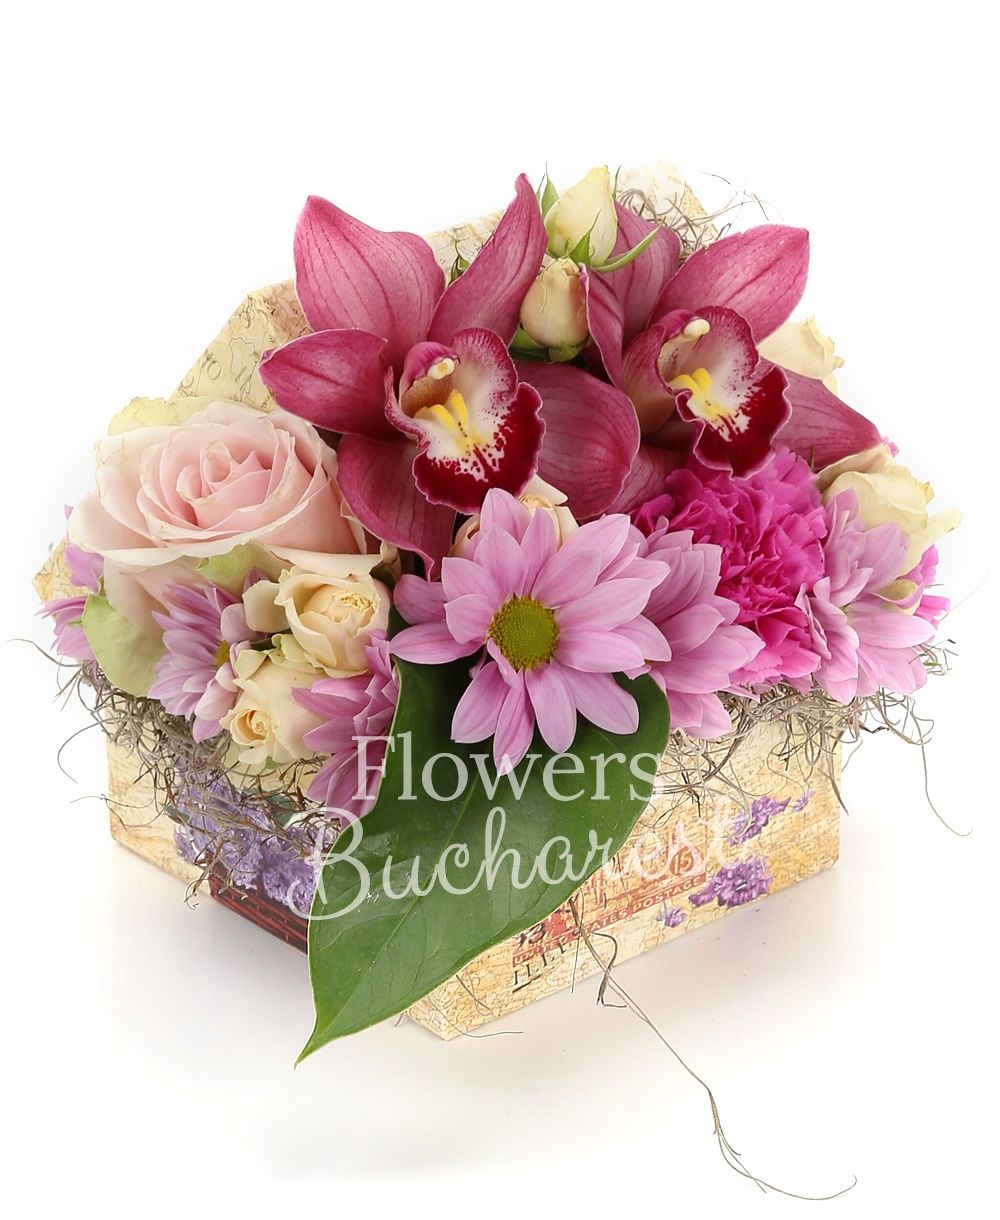 2 pink cymbidium, 2 peach avalanche roses, 2 miniroses, 3 carnations, 1 pink chrysanthemum, greenery